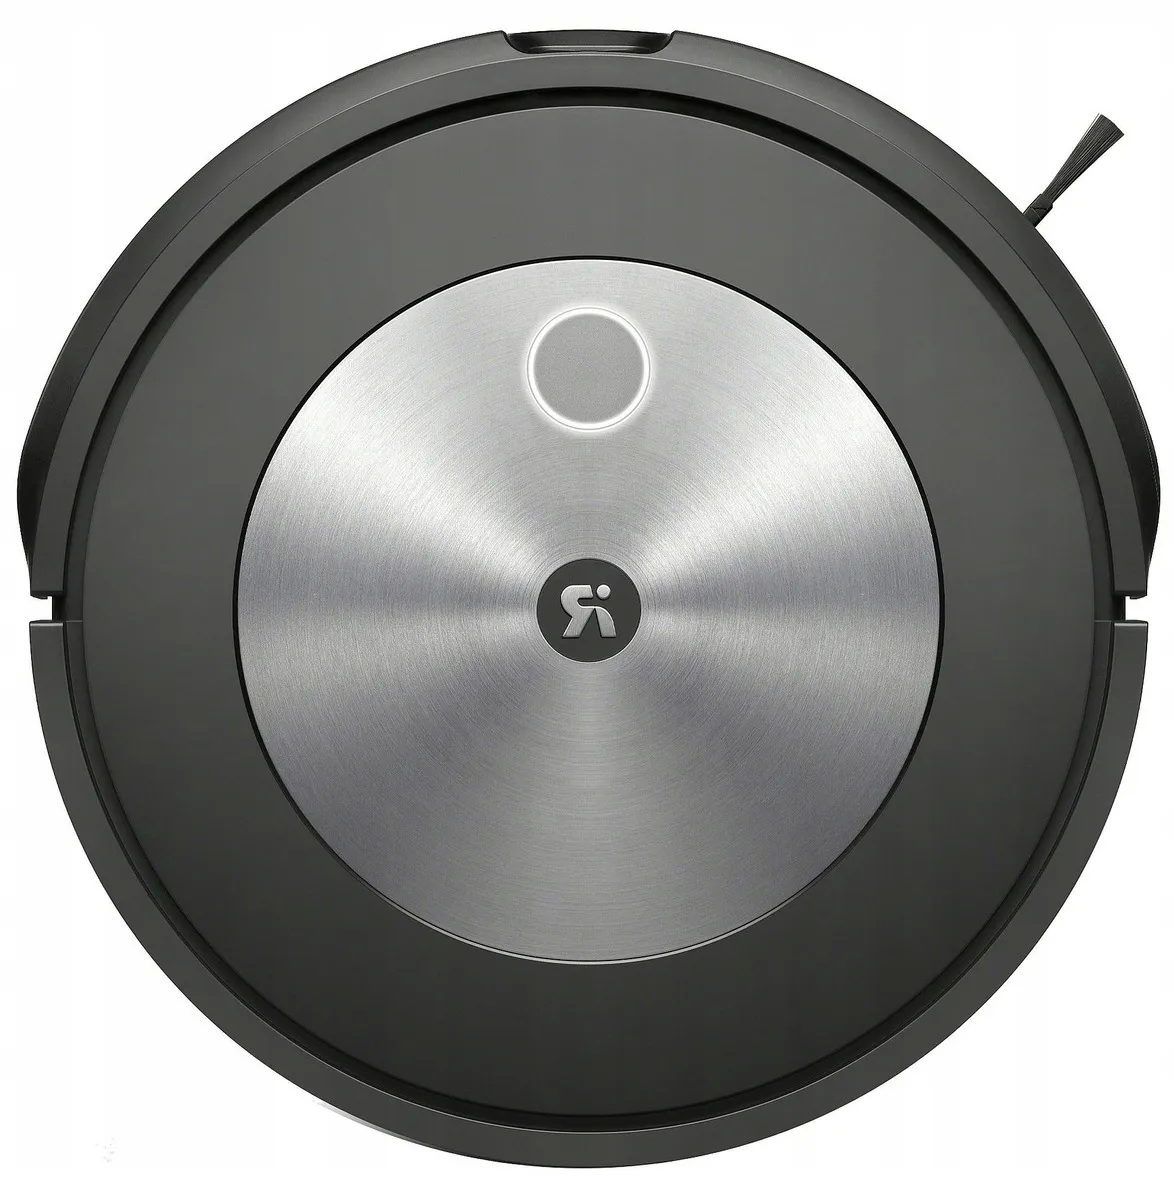  iRobot Roomba j7